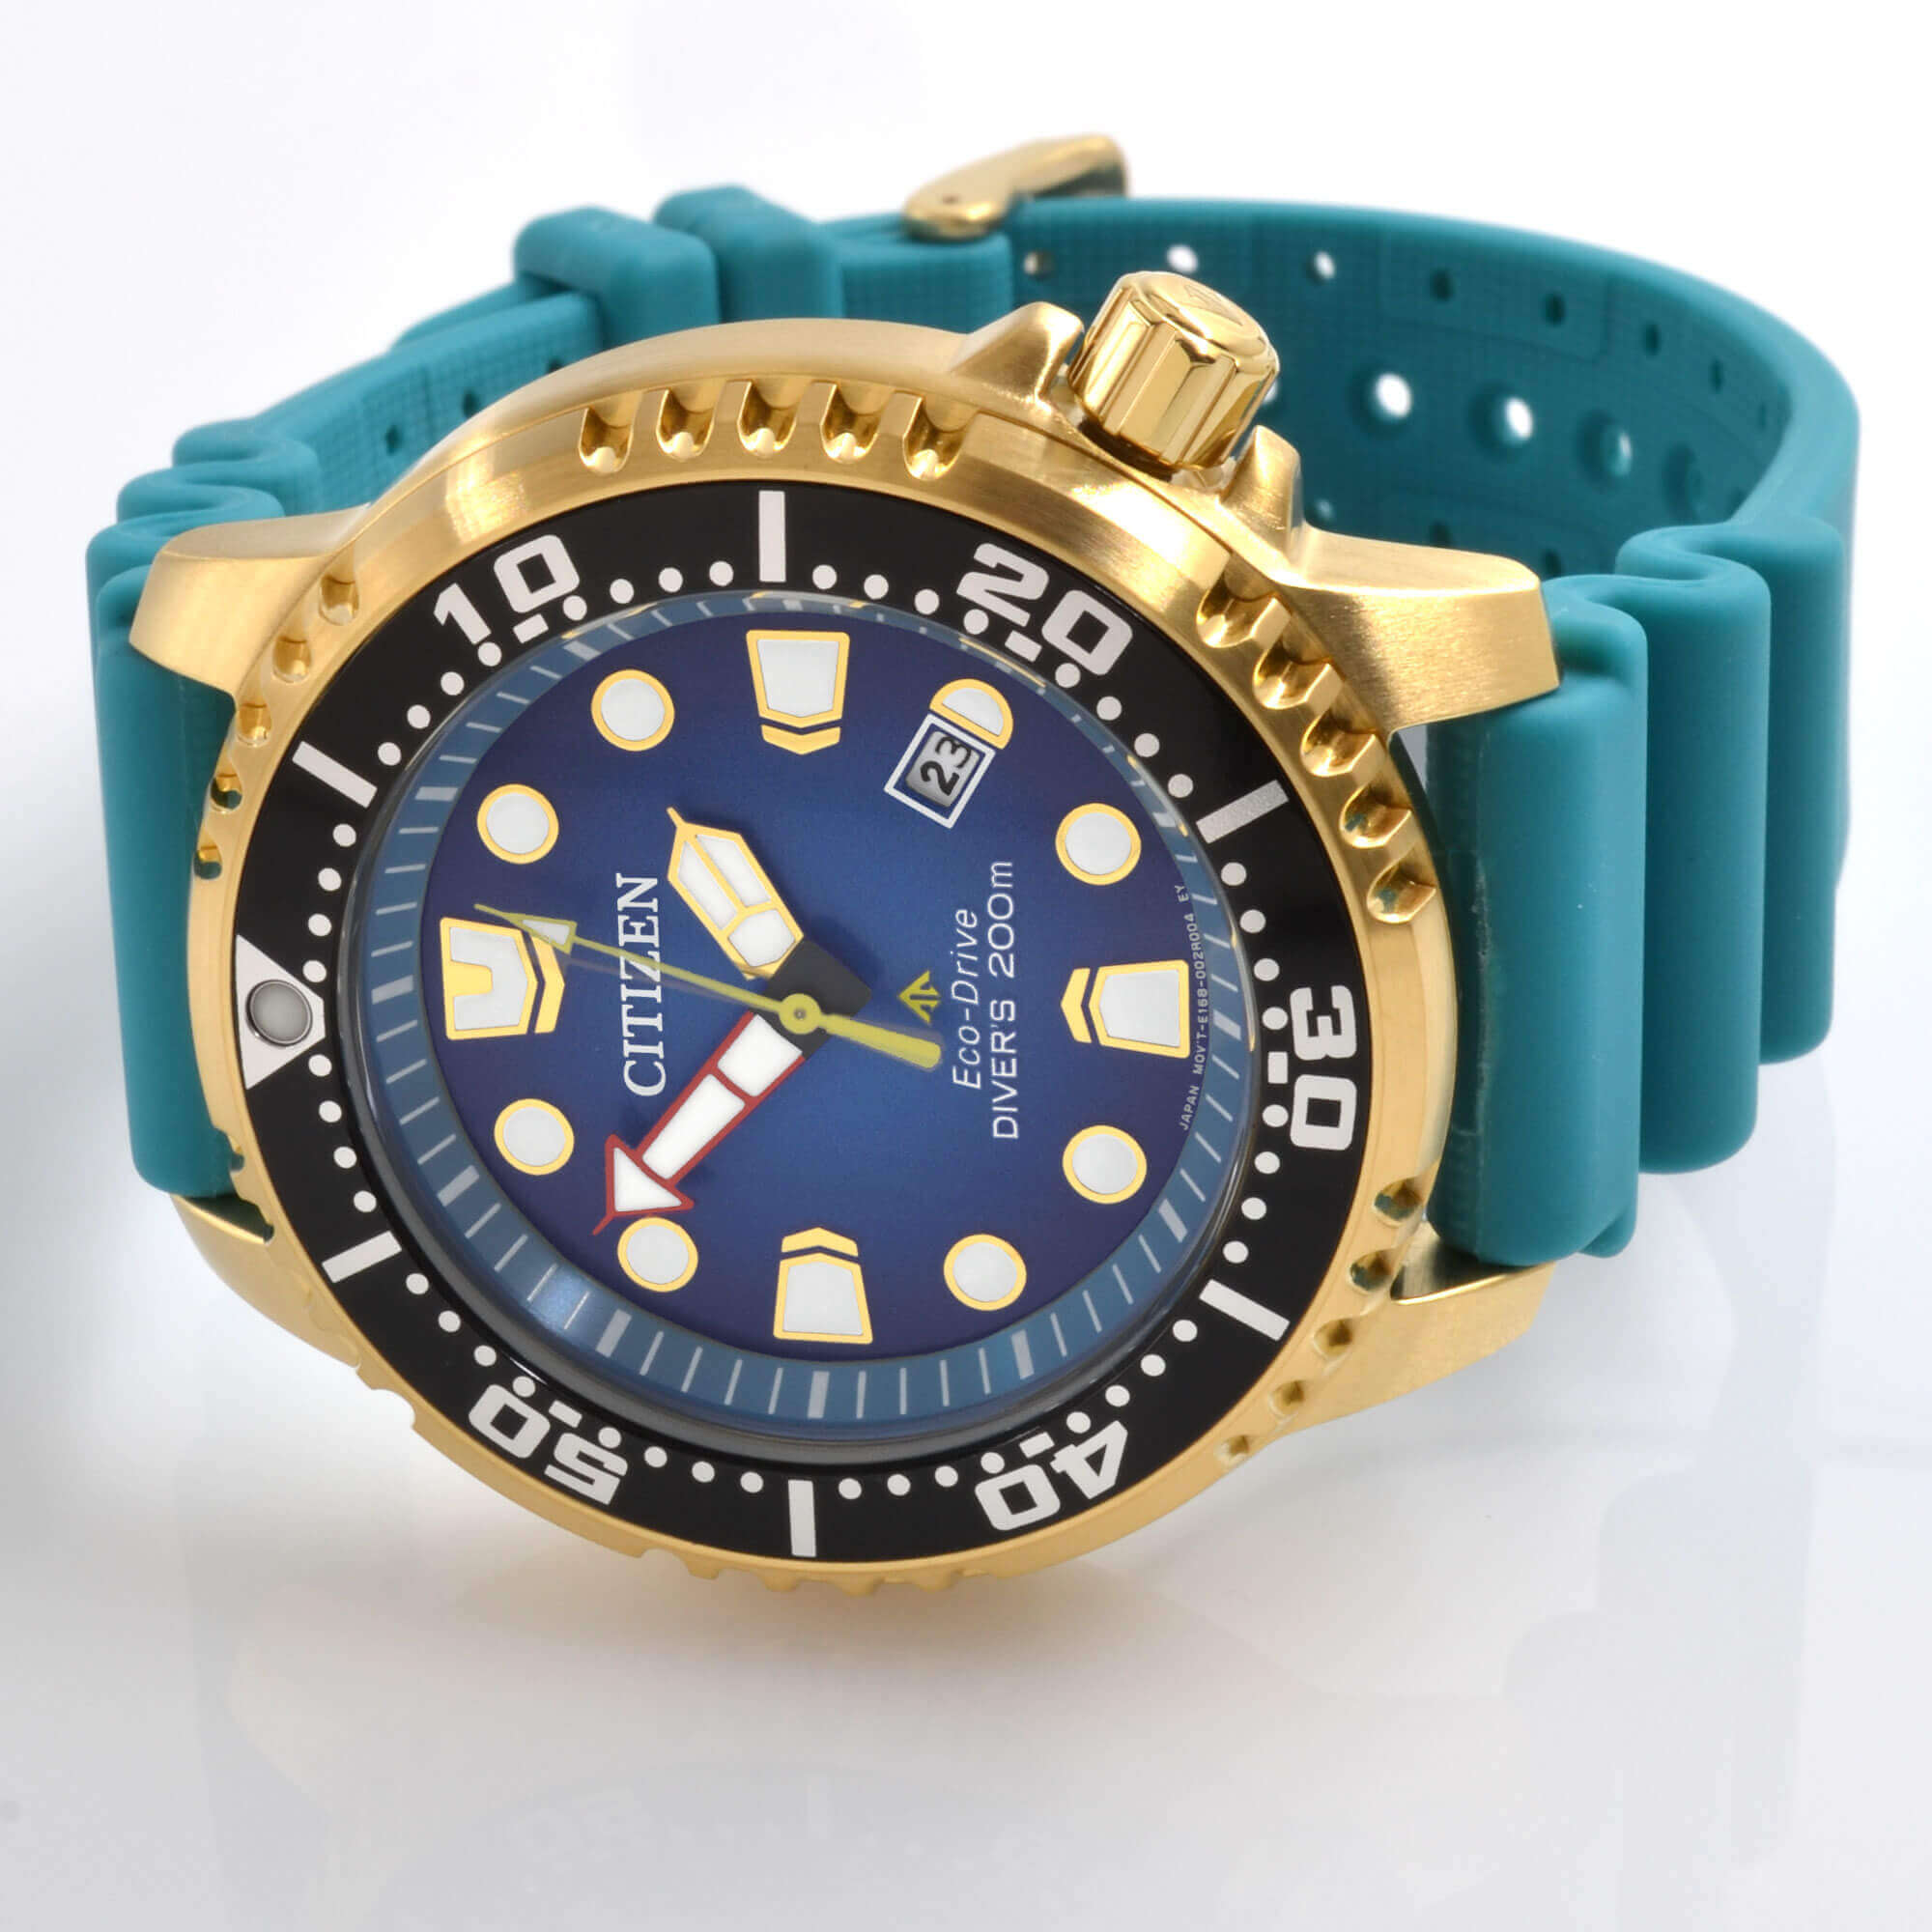 Citizen BN0162-02X Men's Promaster Dive Blue Dial Strap Watch - image 2 of 3